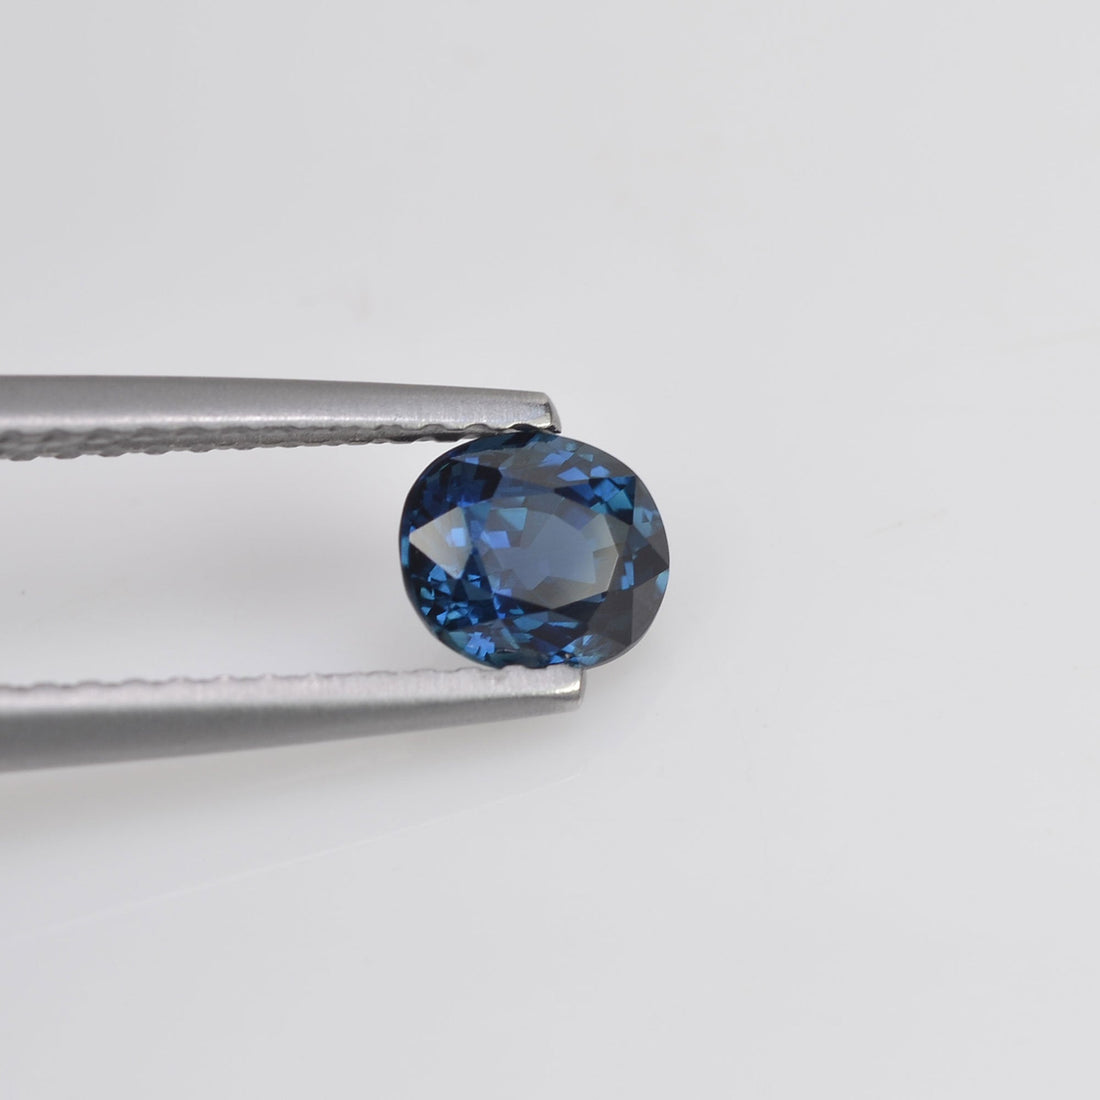 0.78 cts  Natural Blue Sapphire Loose Gemstone Oval Cut - Thai Gems Export Ltd.